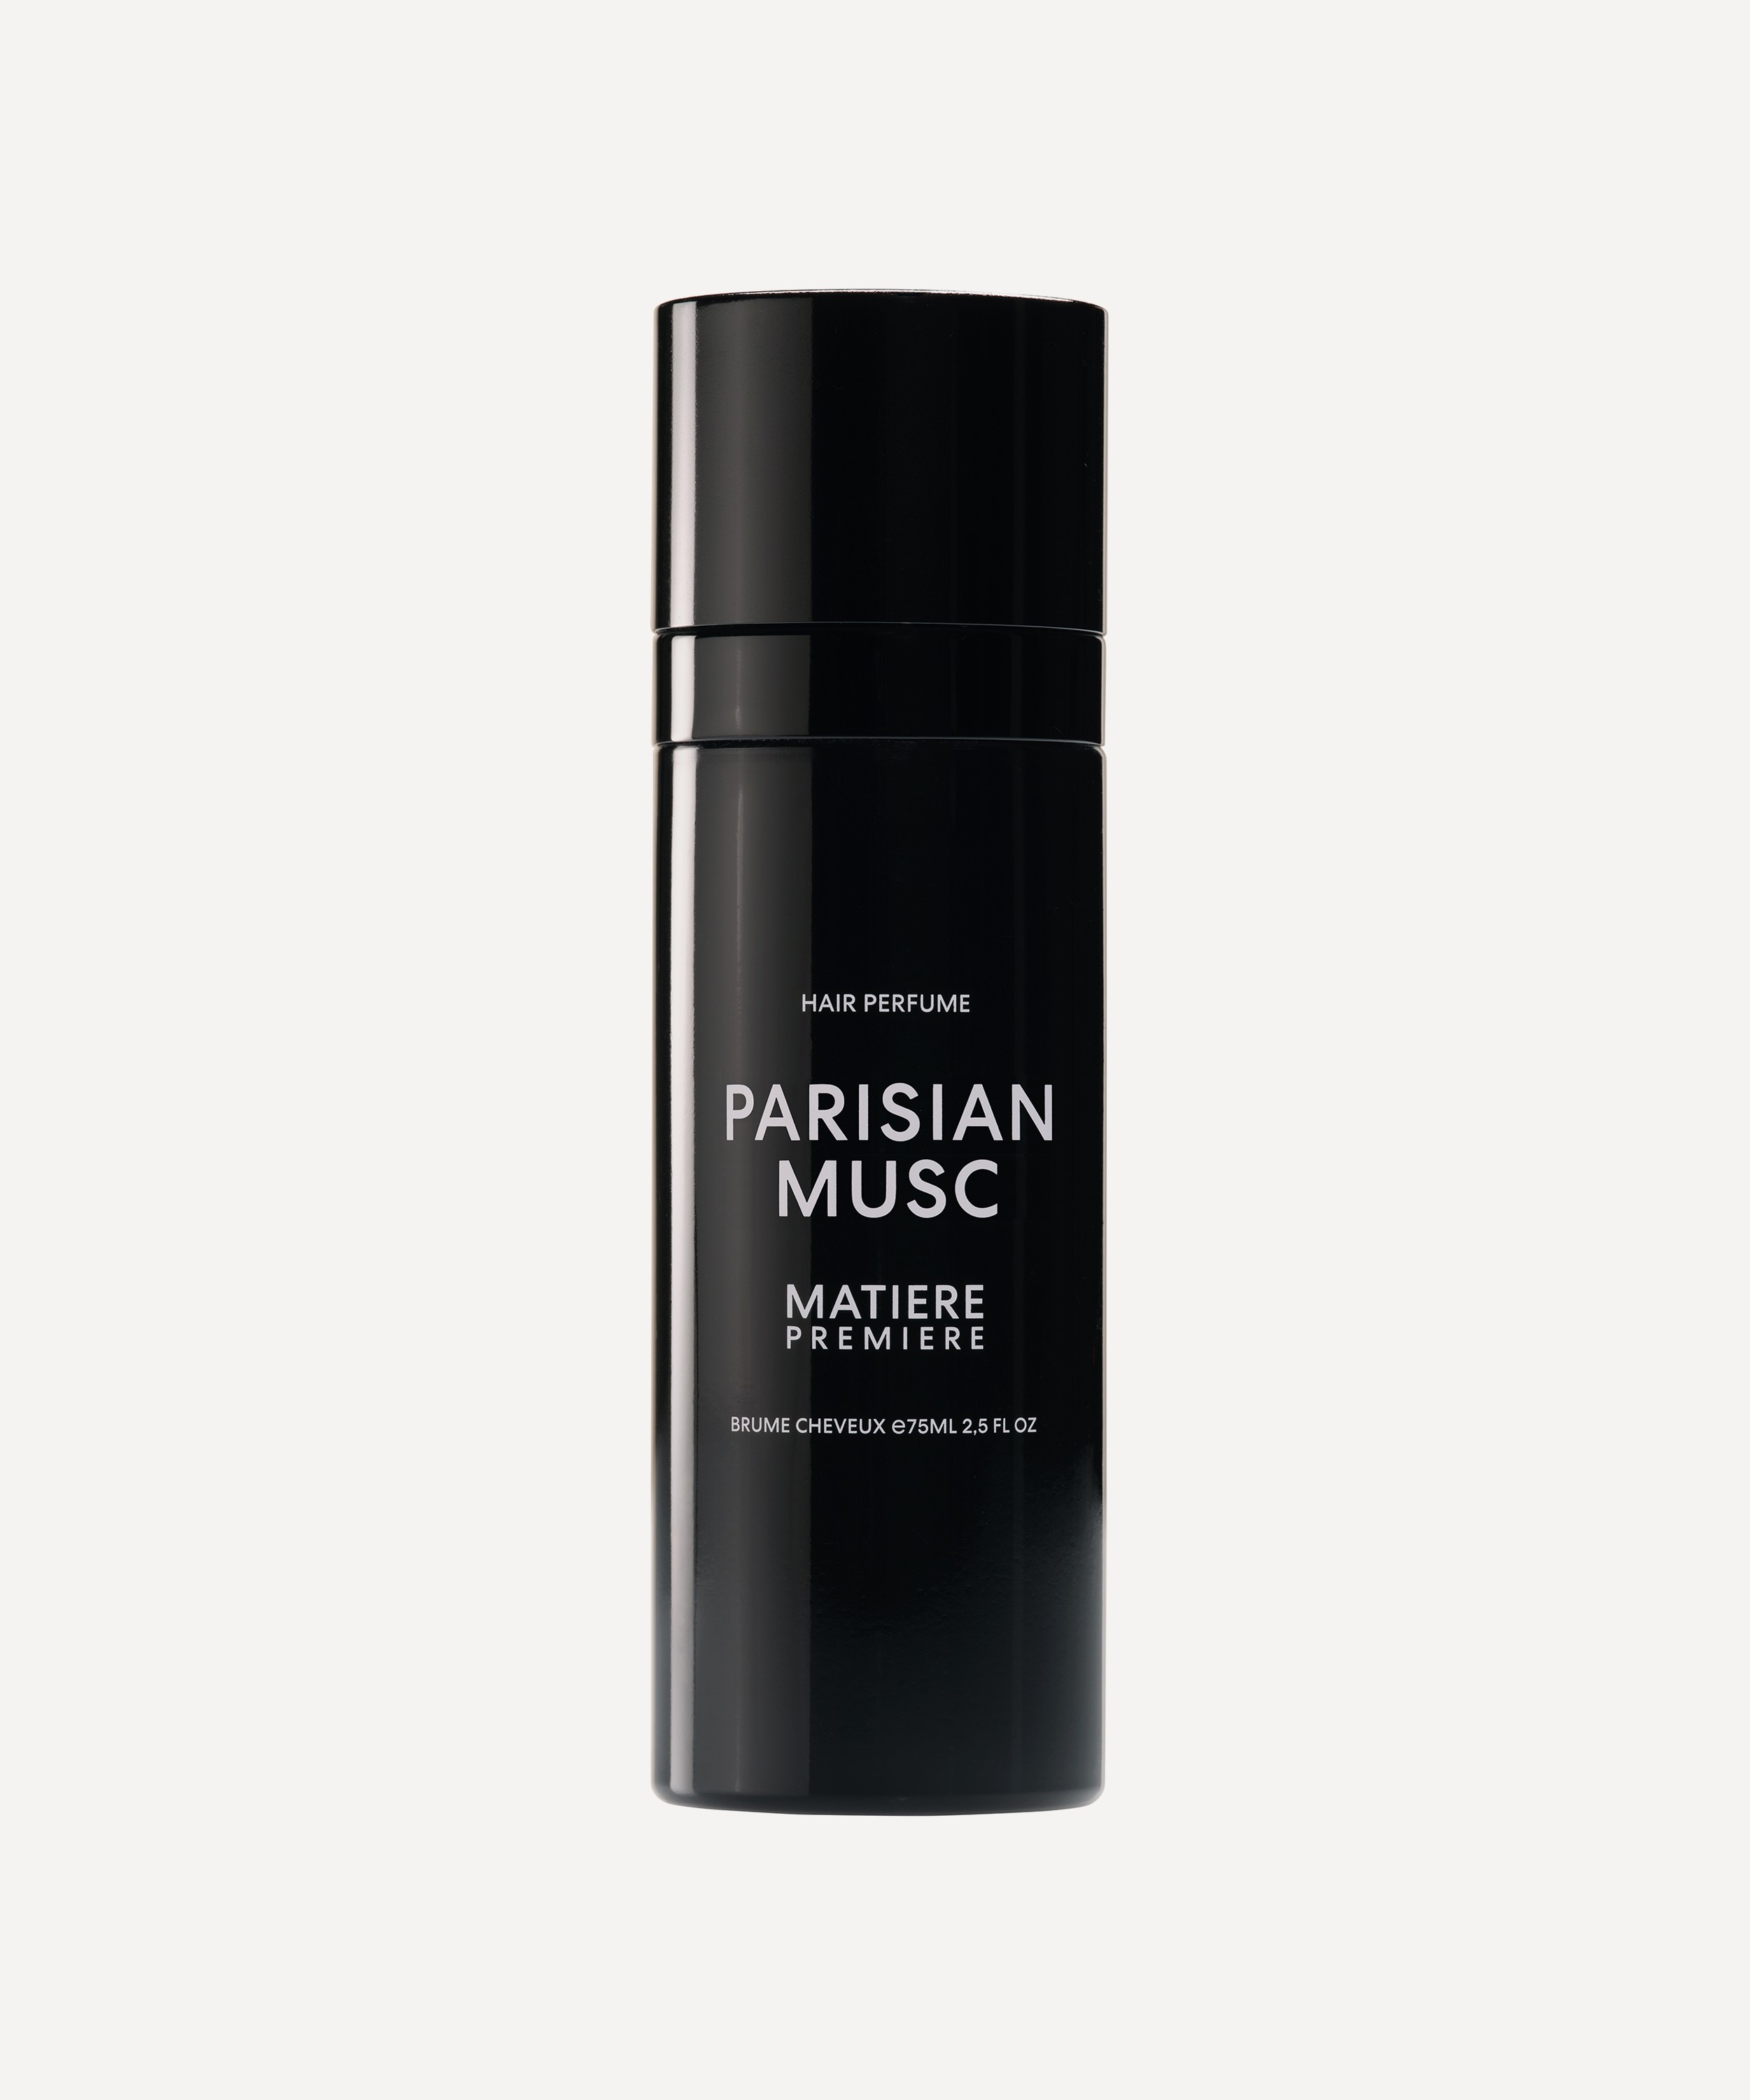 MATIERE PREMIERE - Parisian Musc Hair Perfume 75ml image number 0